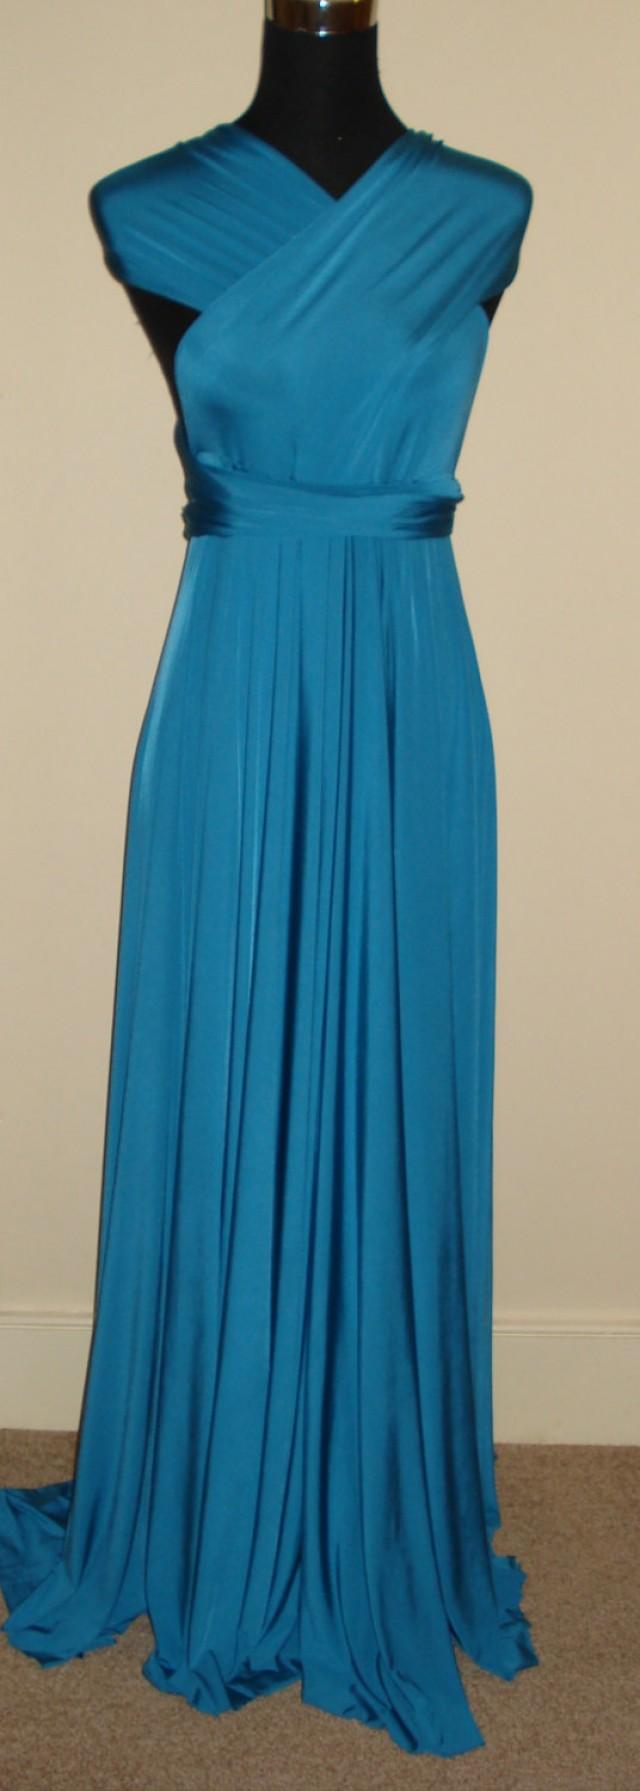 Teal Bridesmaid Dress Teal Blue Convertible Dress Infinity Dress Wrap ...